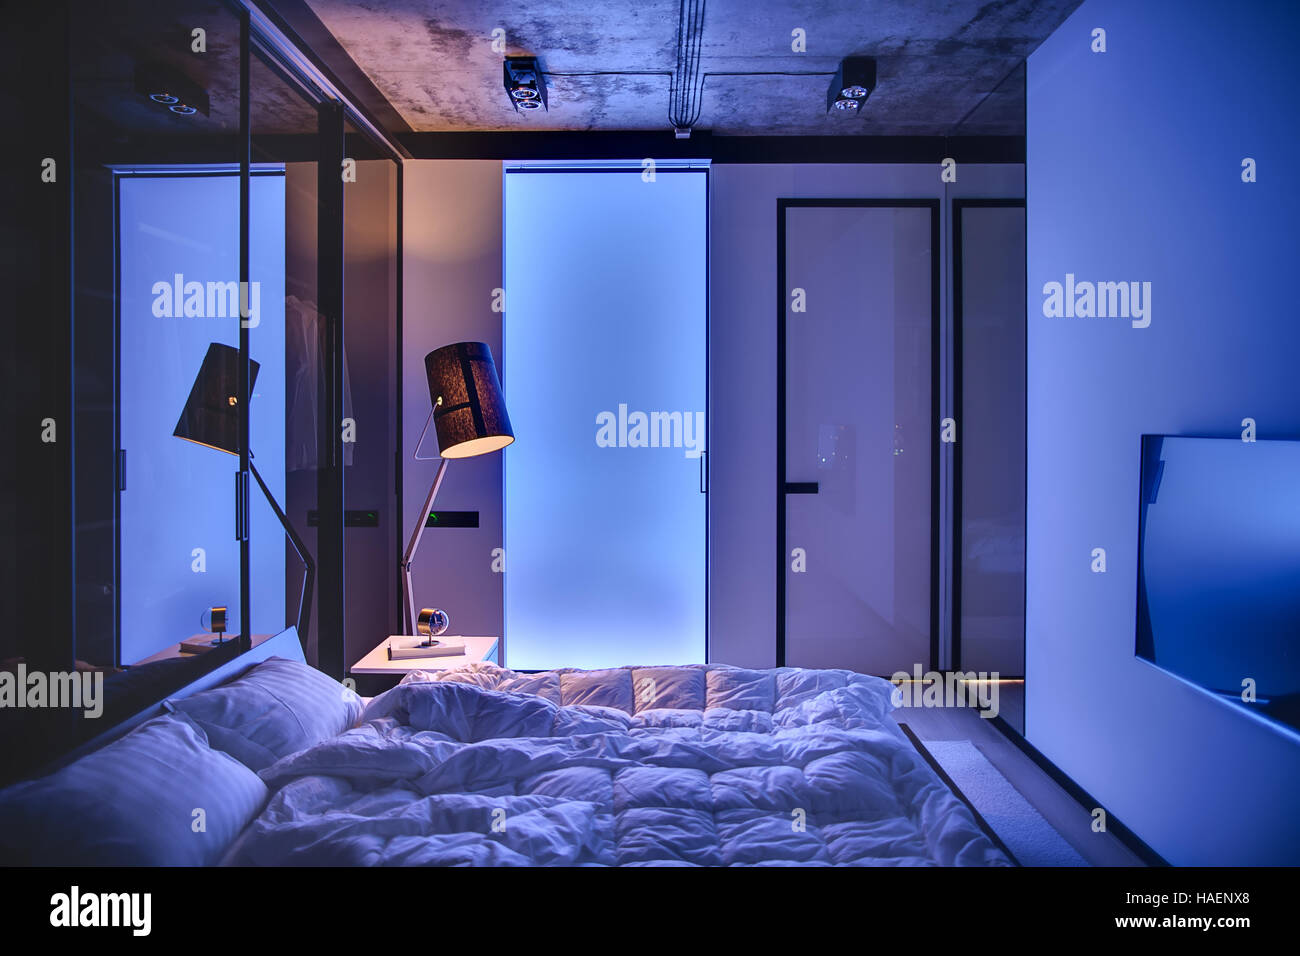 Bedroom in loft style Stock Photo